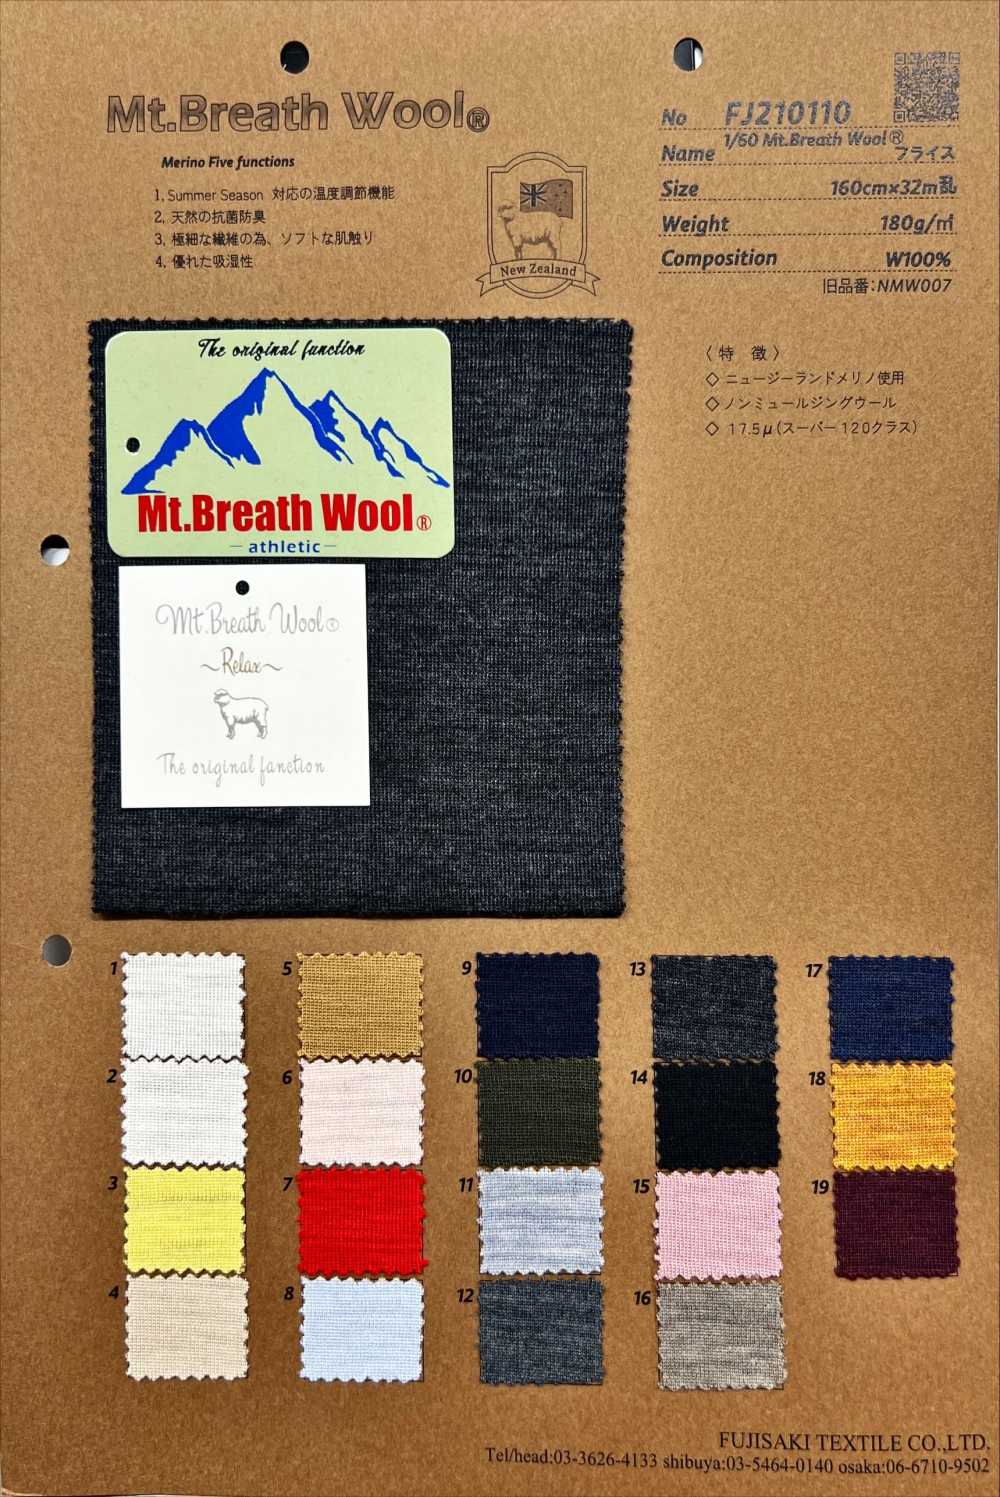 FJ210110 1/60 Mt.Breath 羊毛针织罗纹[面料] Fujisaki Textile